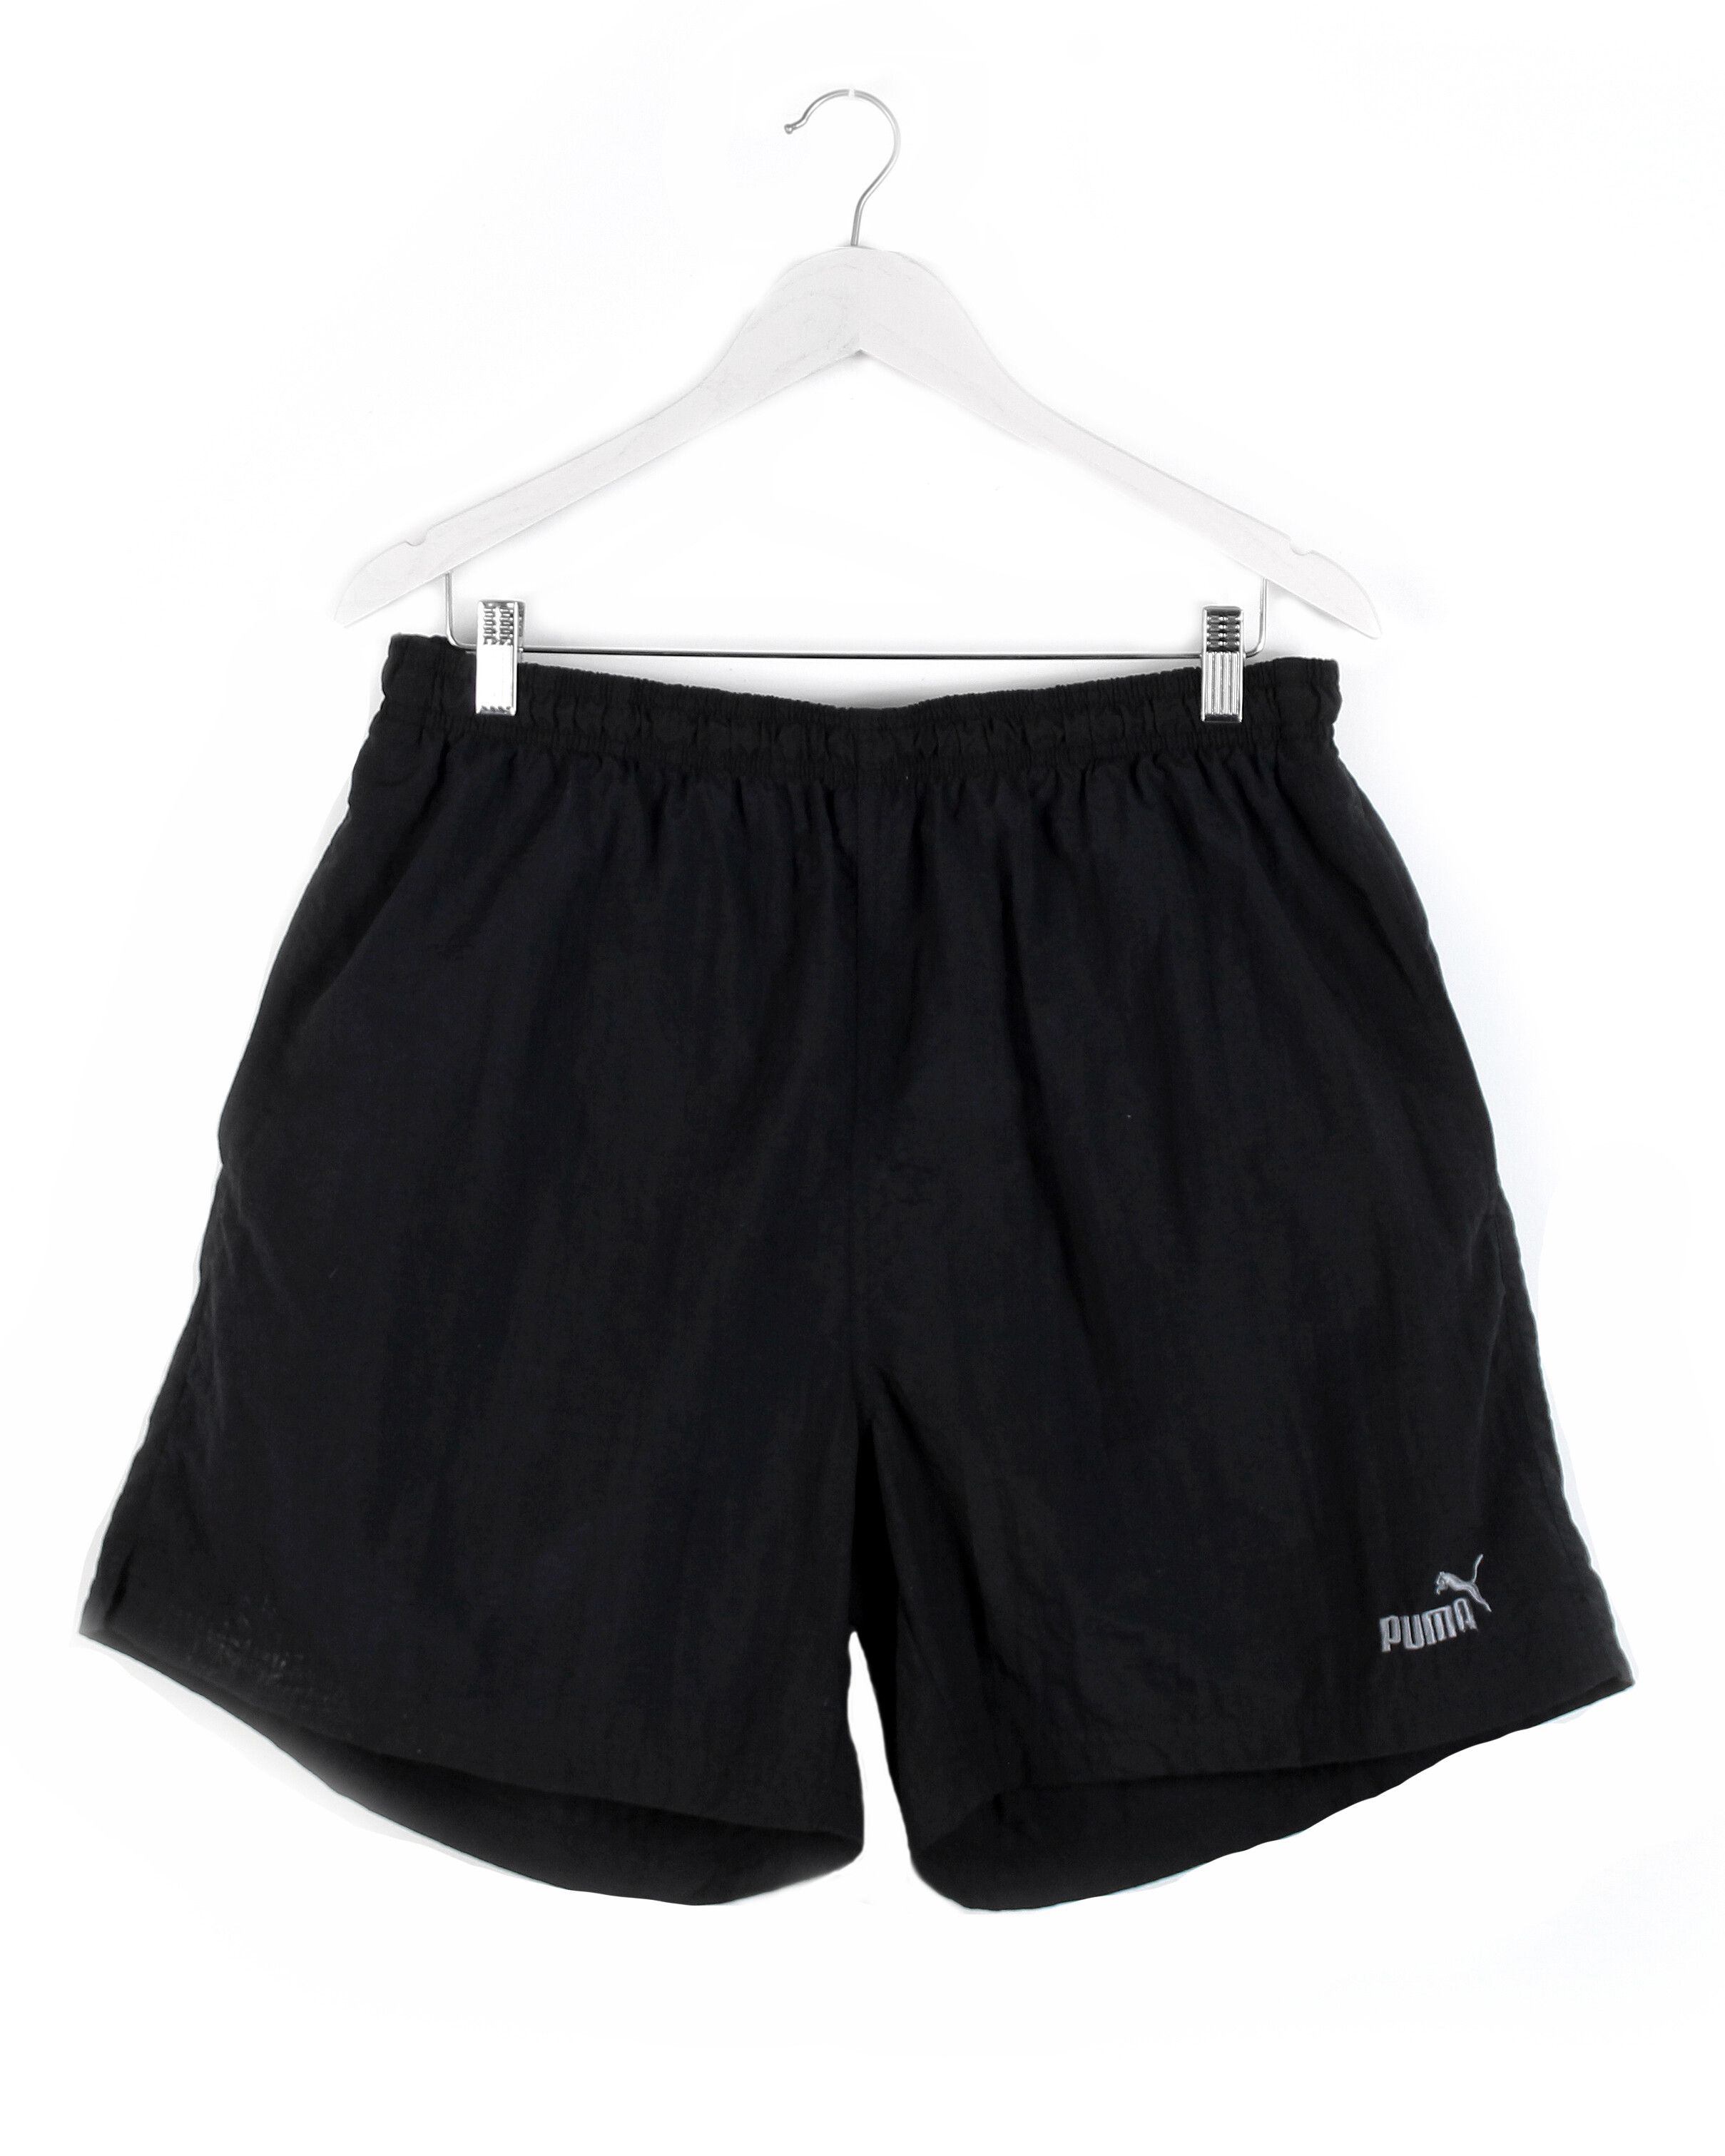 Vintage 90s vintage PUMA shorts black nylon athletic sports XL XXL Size 40" / US 18 - 1 Preview